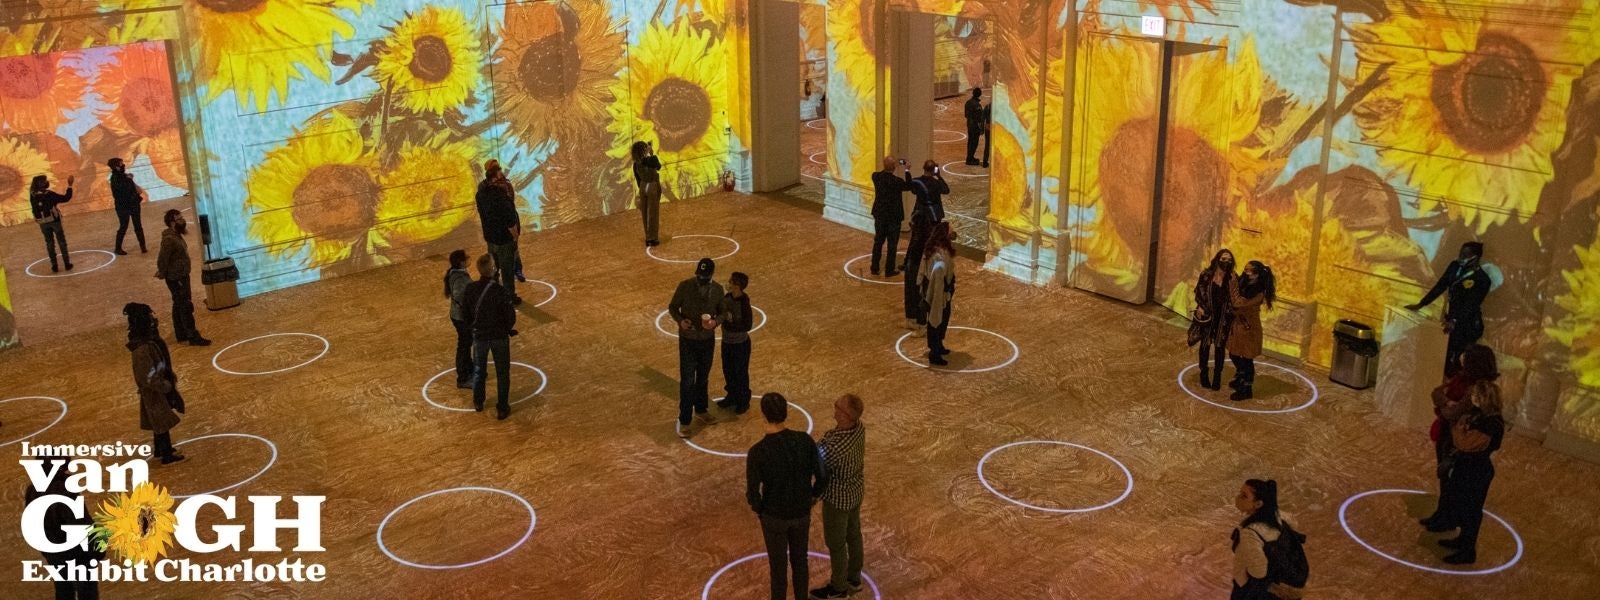 'Immersive Van Gogh' Charlotte to Debut Artistin